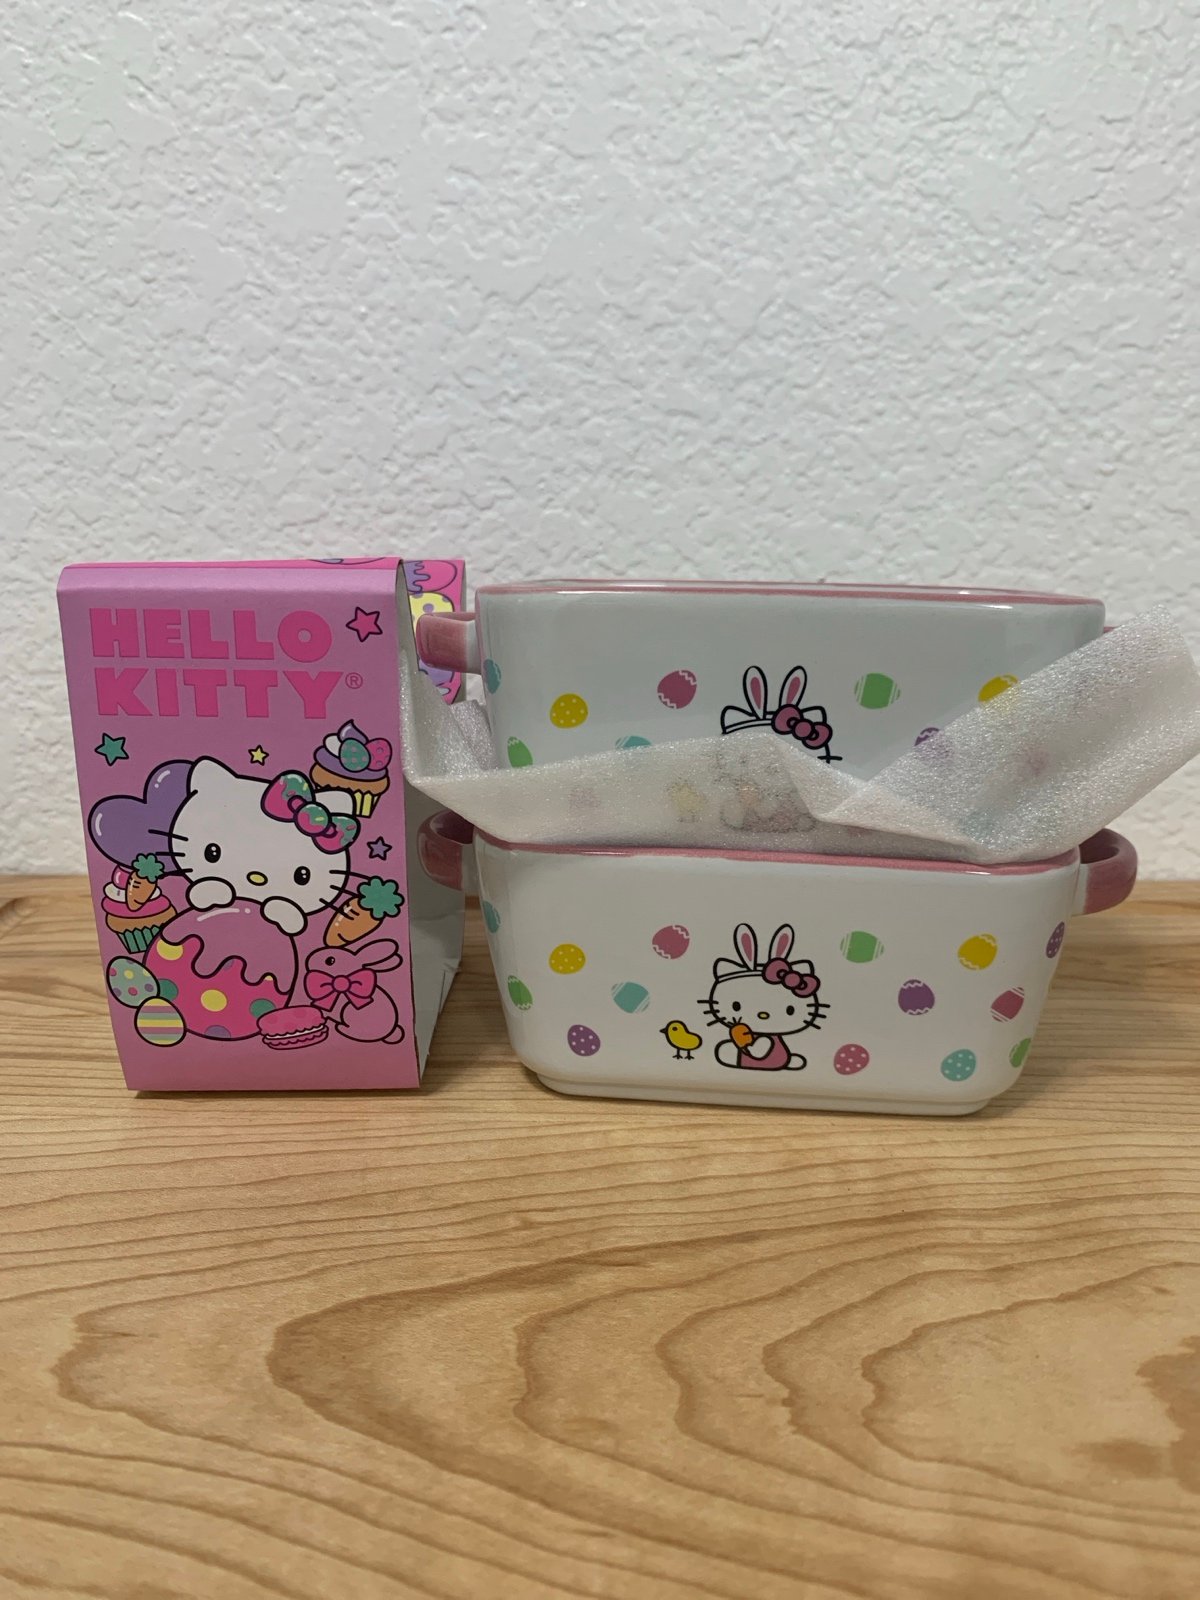 Hello Kitty Easter Bunny Spring Mini Bread Loaf Baking Pan By Sanrio Zrike Brand LZW1ZsI77